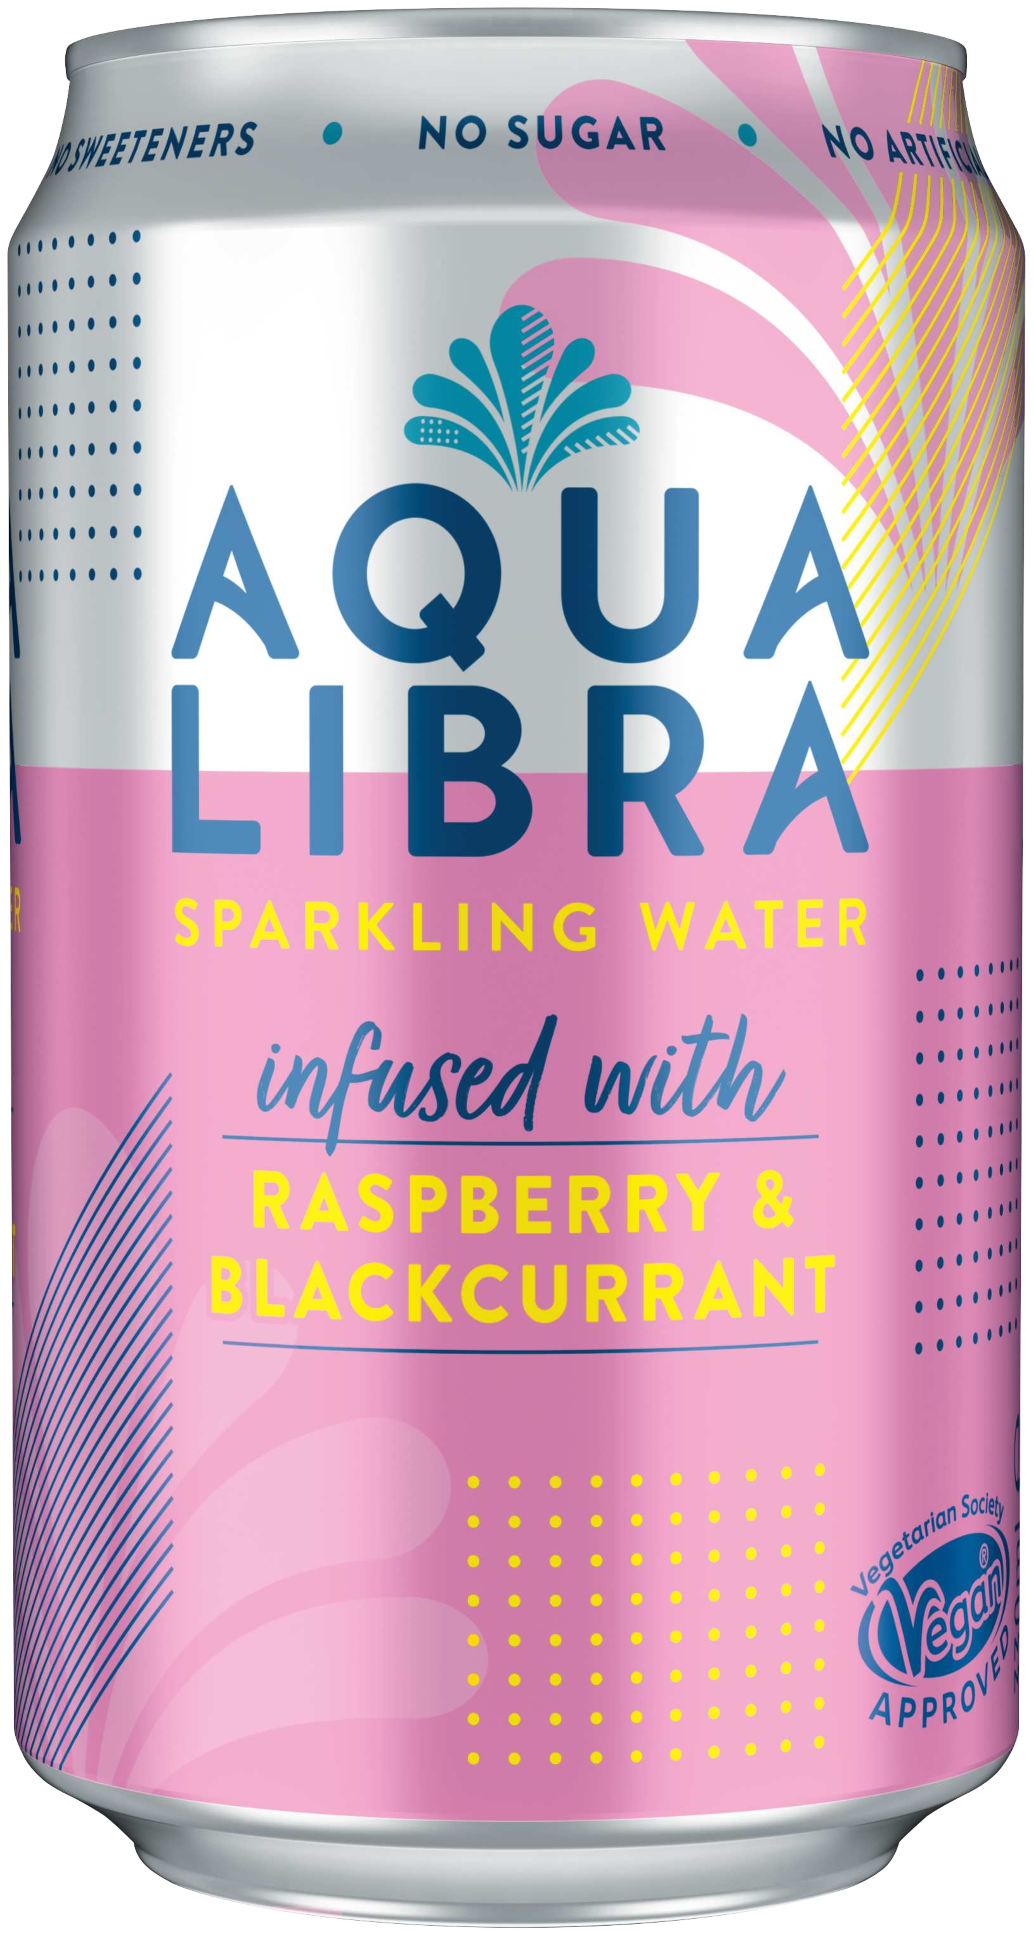 Aqua Libra launches new Raspberry & Blackcurrant flavour